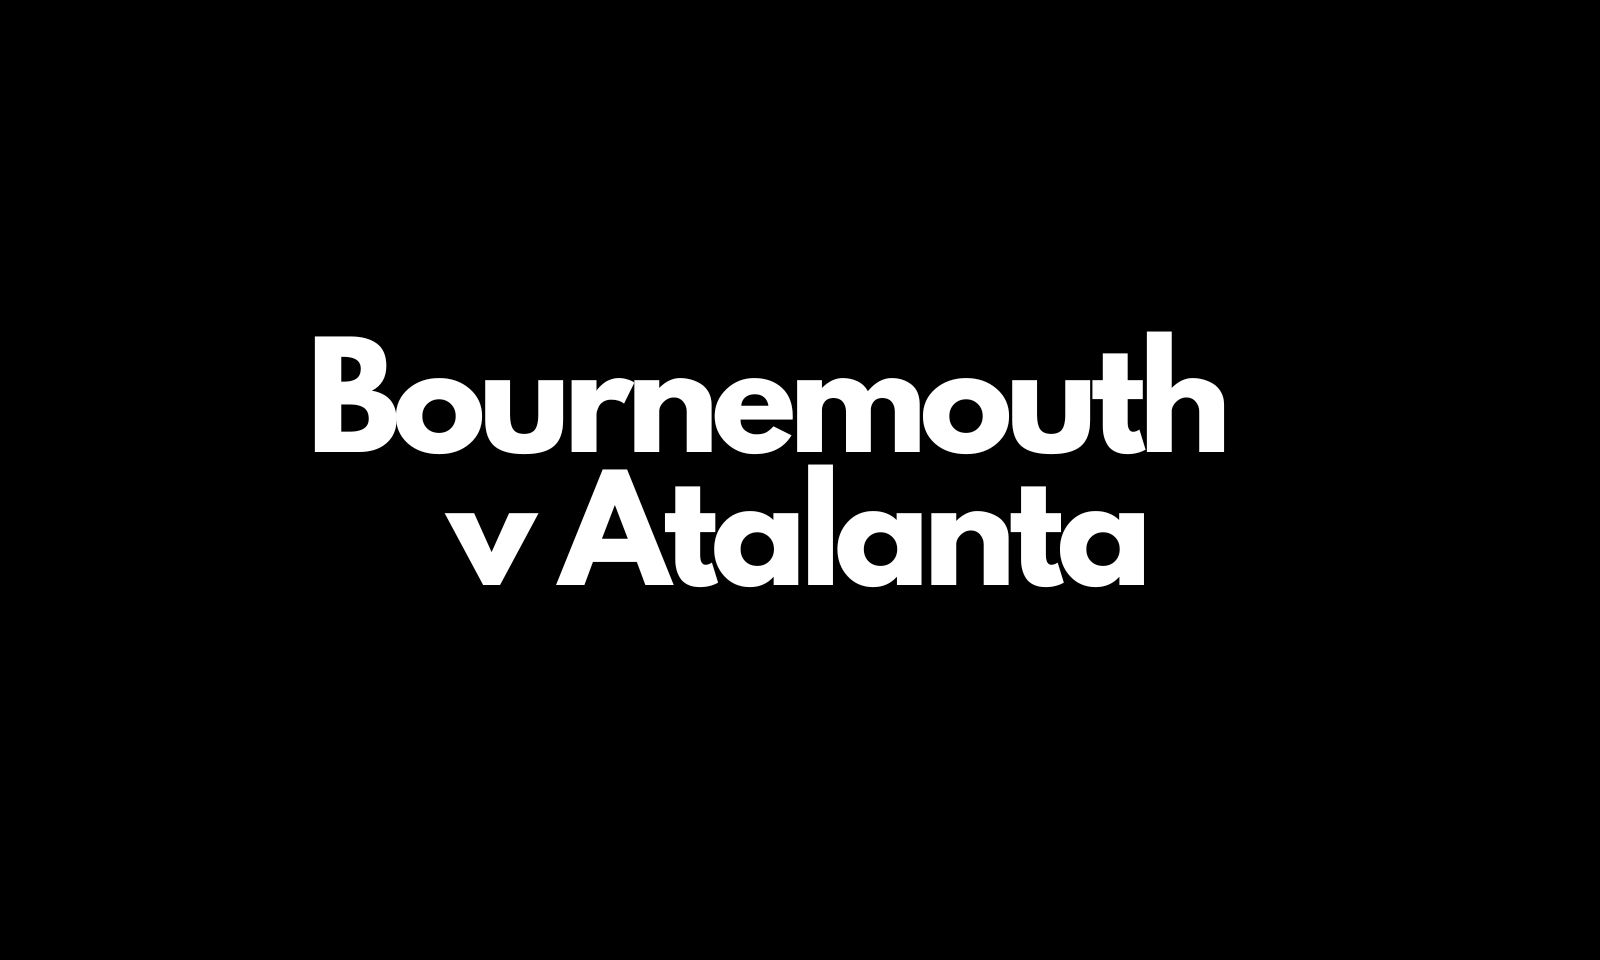 Bournemouth v Atlanata Kick off time, stream and TV channel